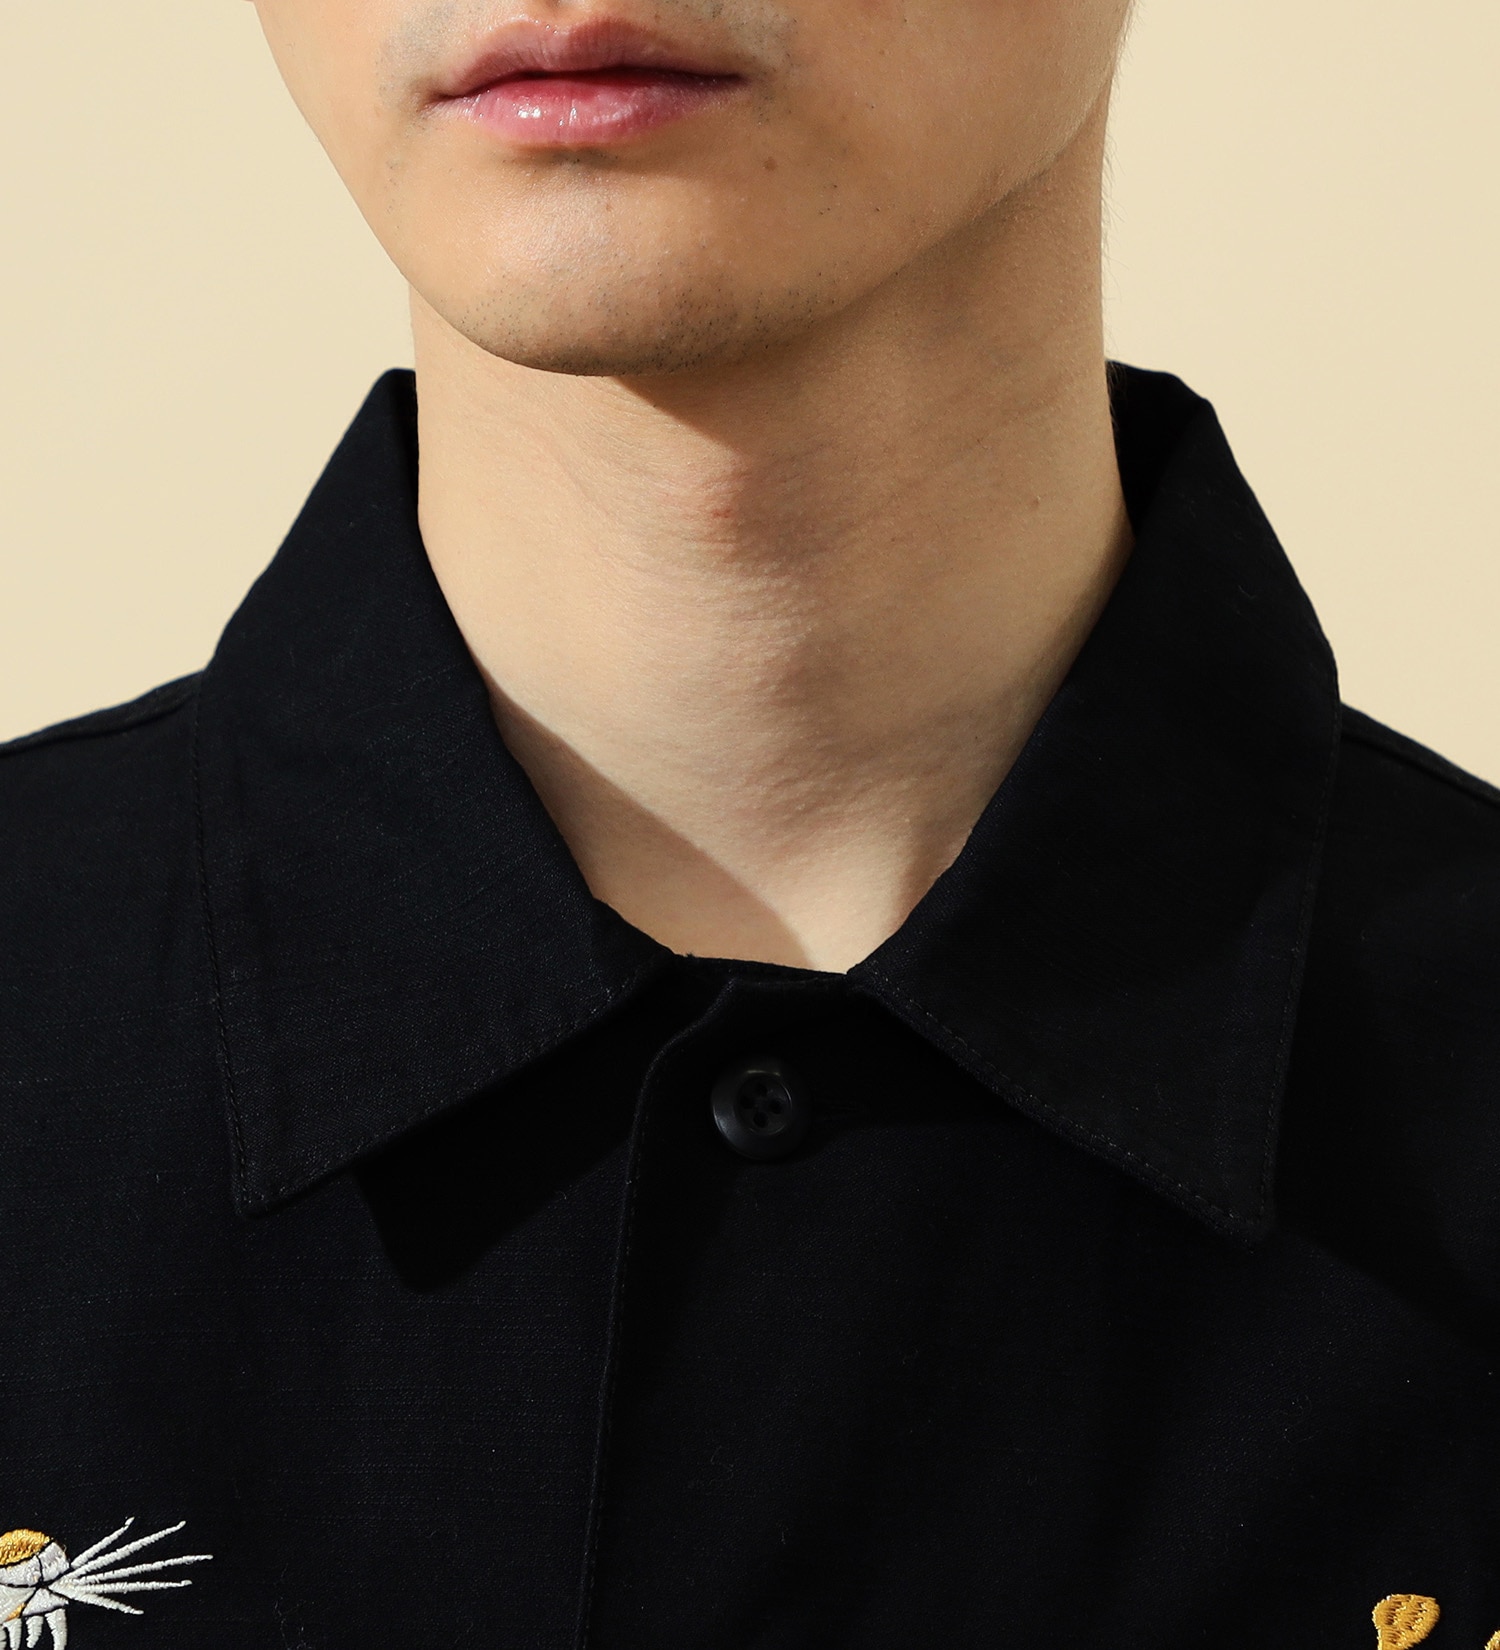 ALPHA(アルファ)のユーティリティシャツ/ベトジャン刺繍 長袖（VIETNAM）|トップス/シャツ/ブラウス/メンズ|ブラック